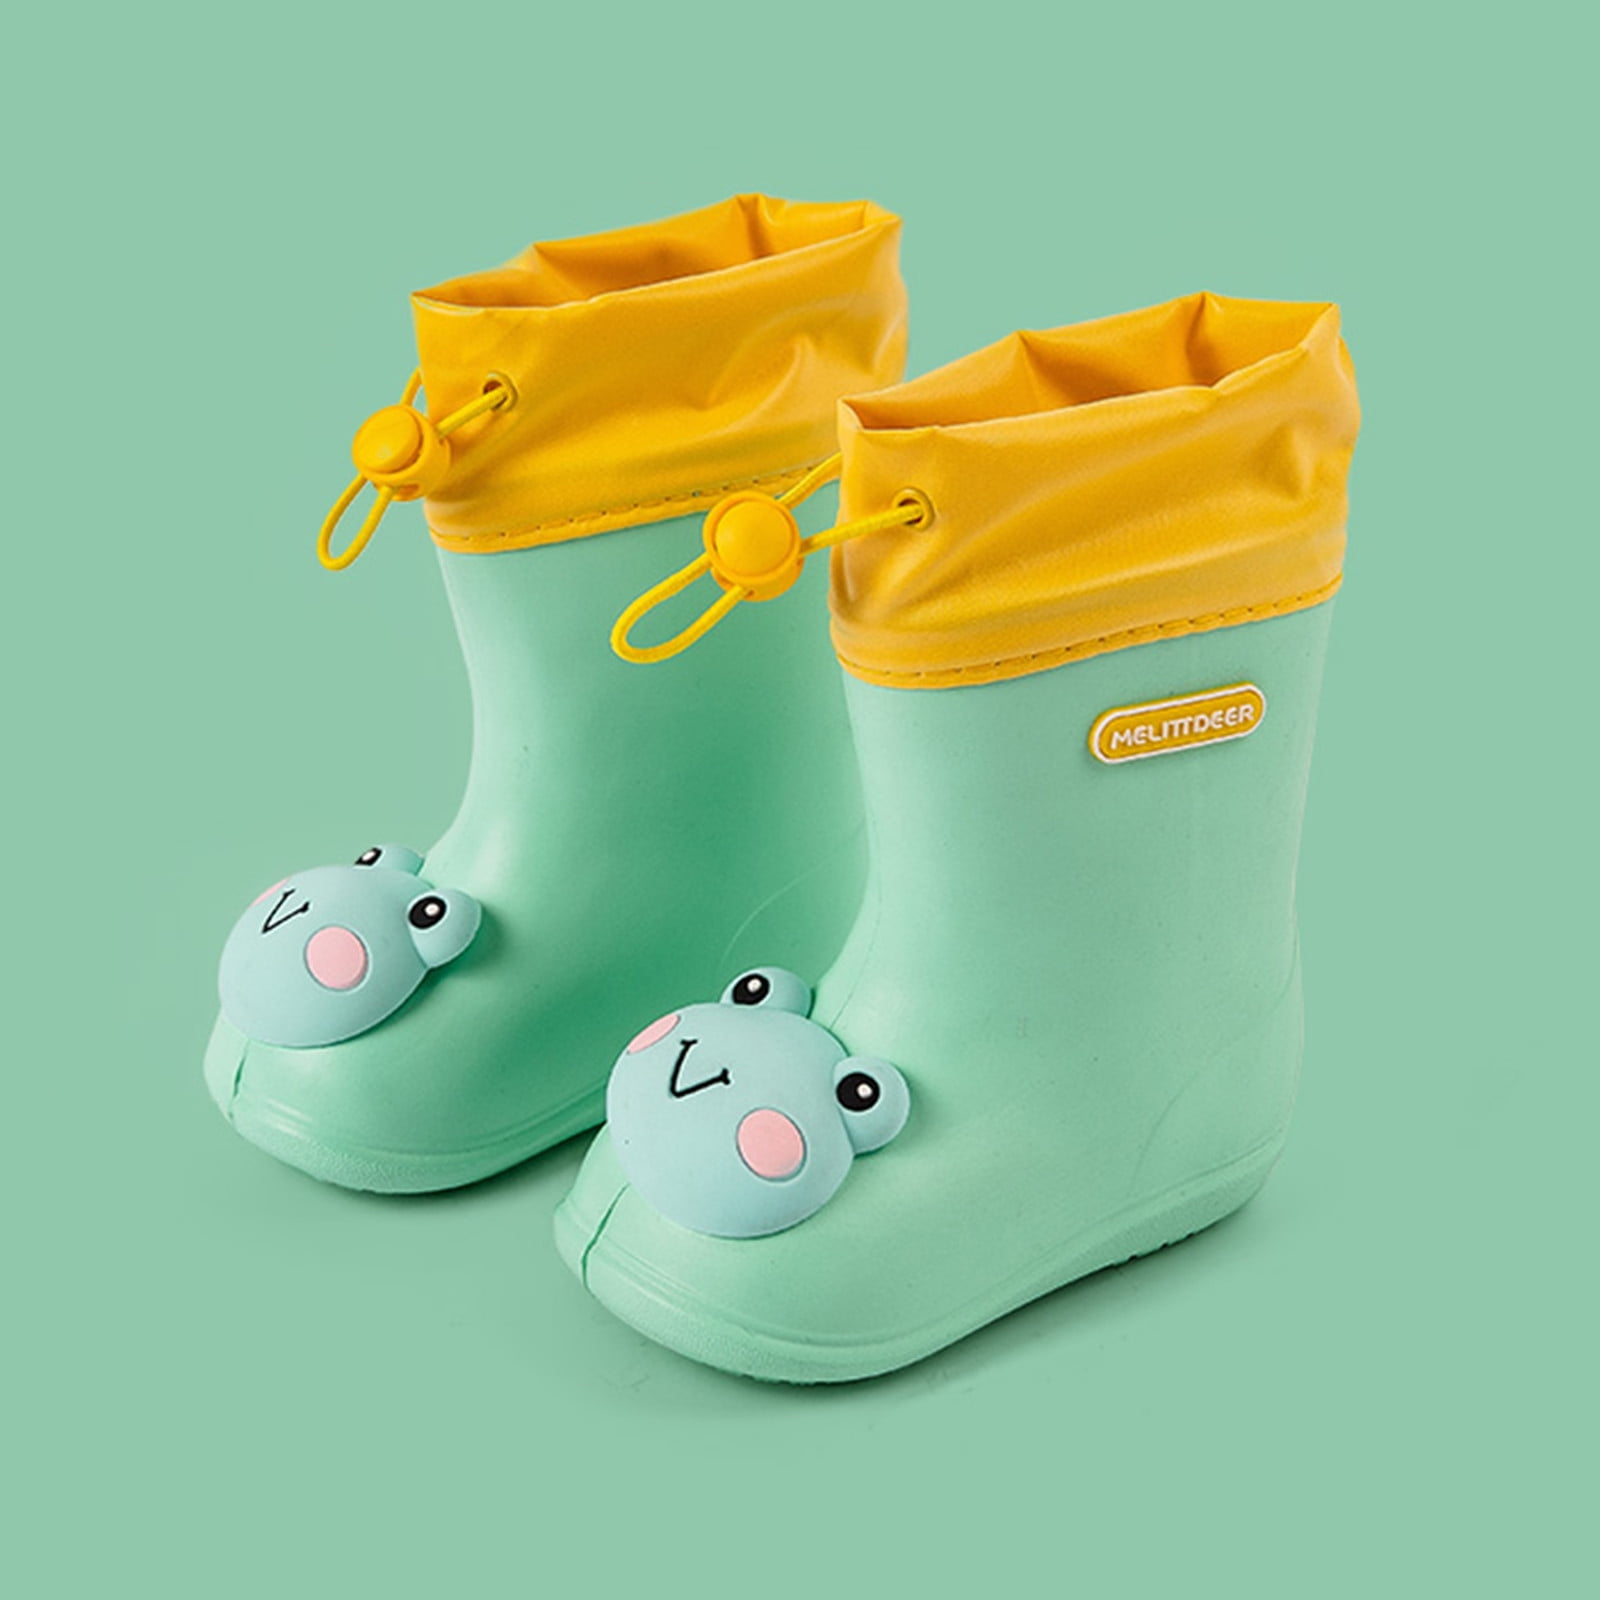 Baby Waterproof Rain Boots,Toddler Infant Kids Baby Boys Girls PVC Rain Boots Waterproof Non-Slip Shoes